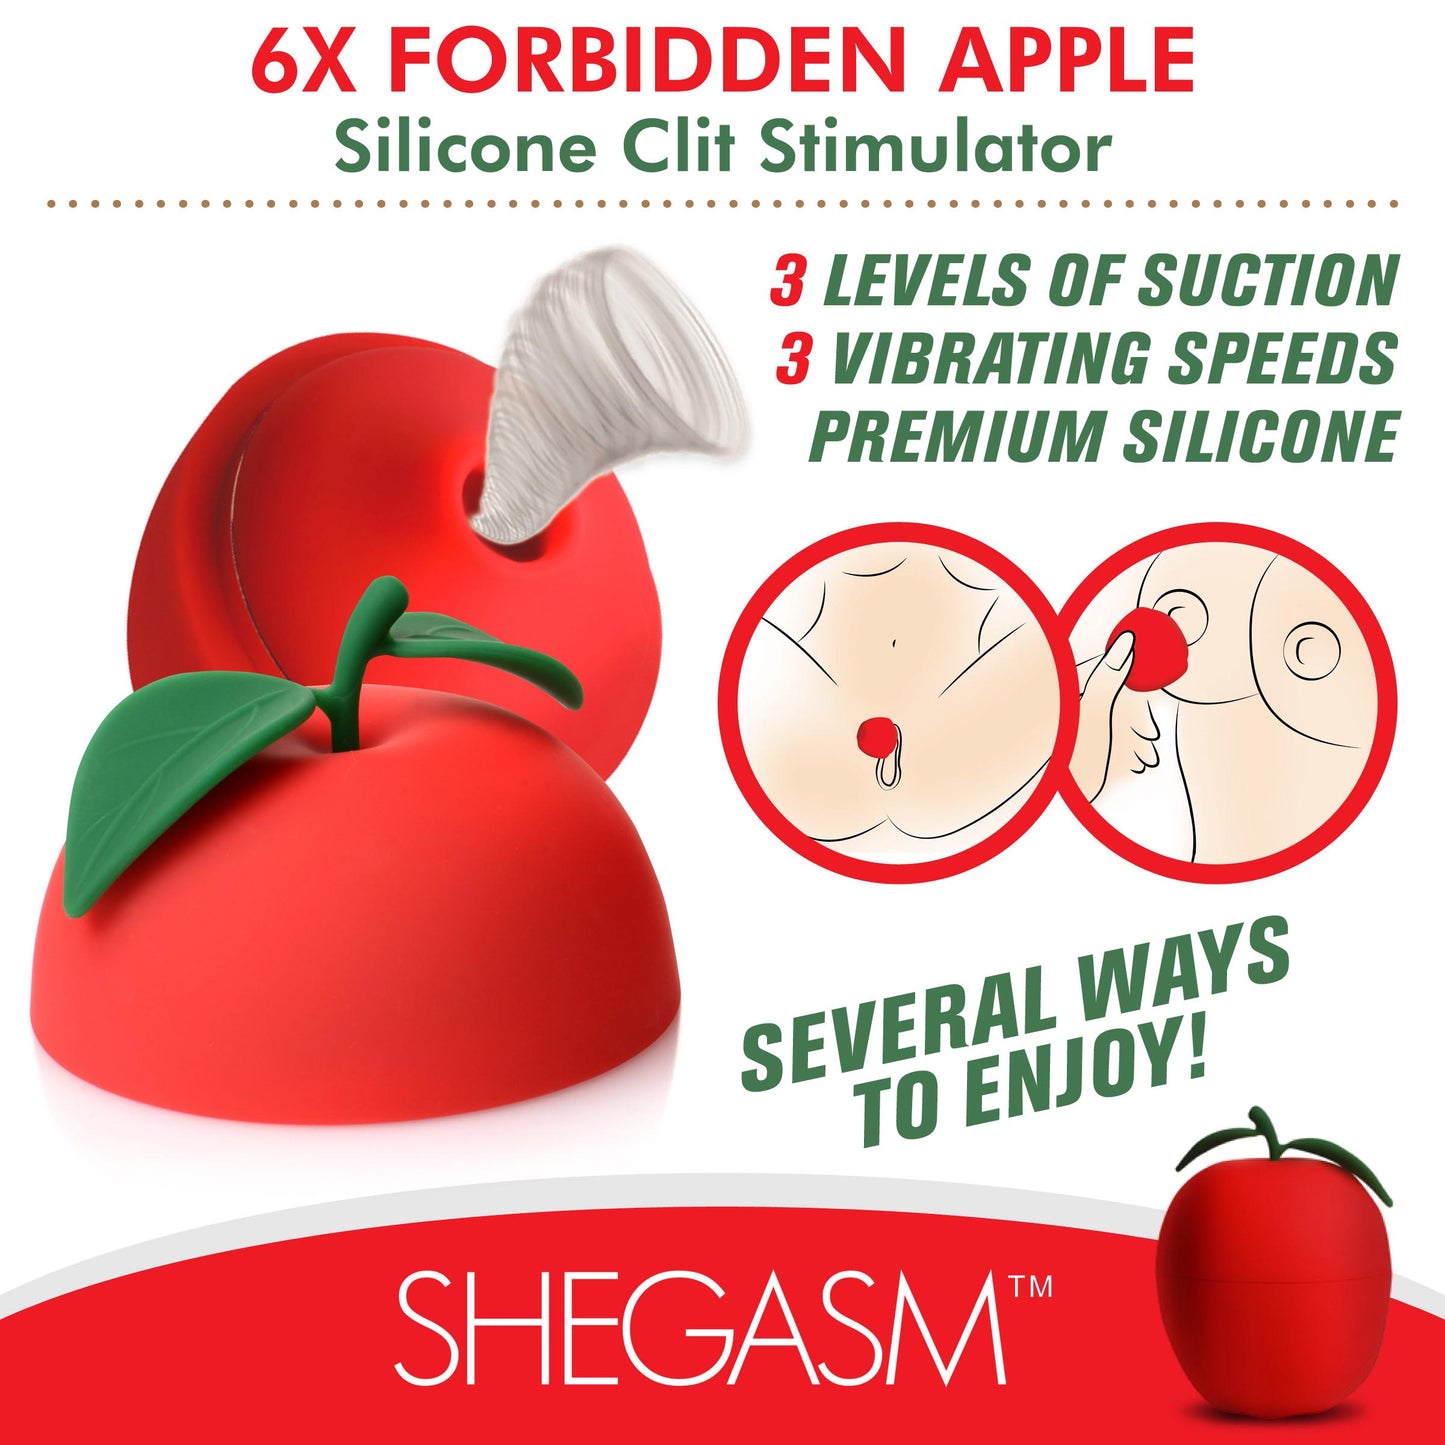 6X Forbidden Apple Silicone Clit Stimulator - UABDSM